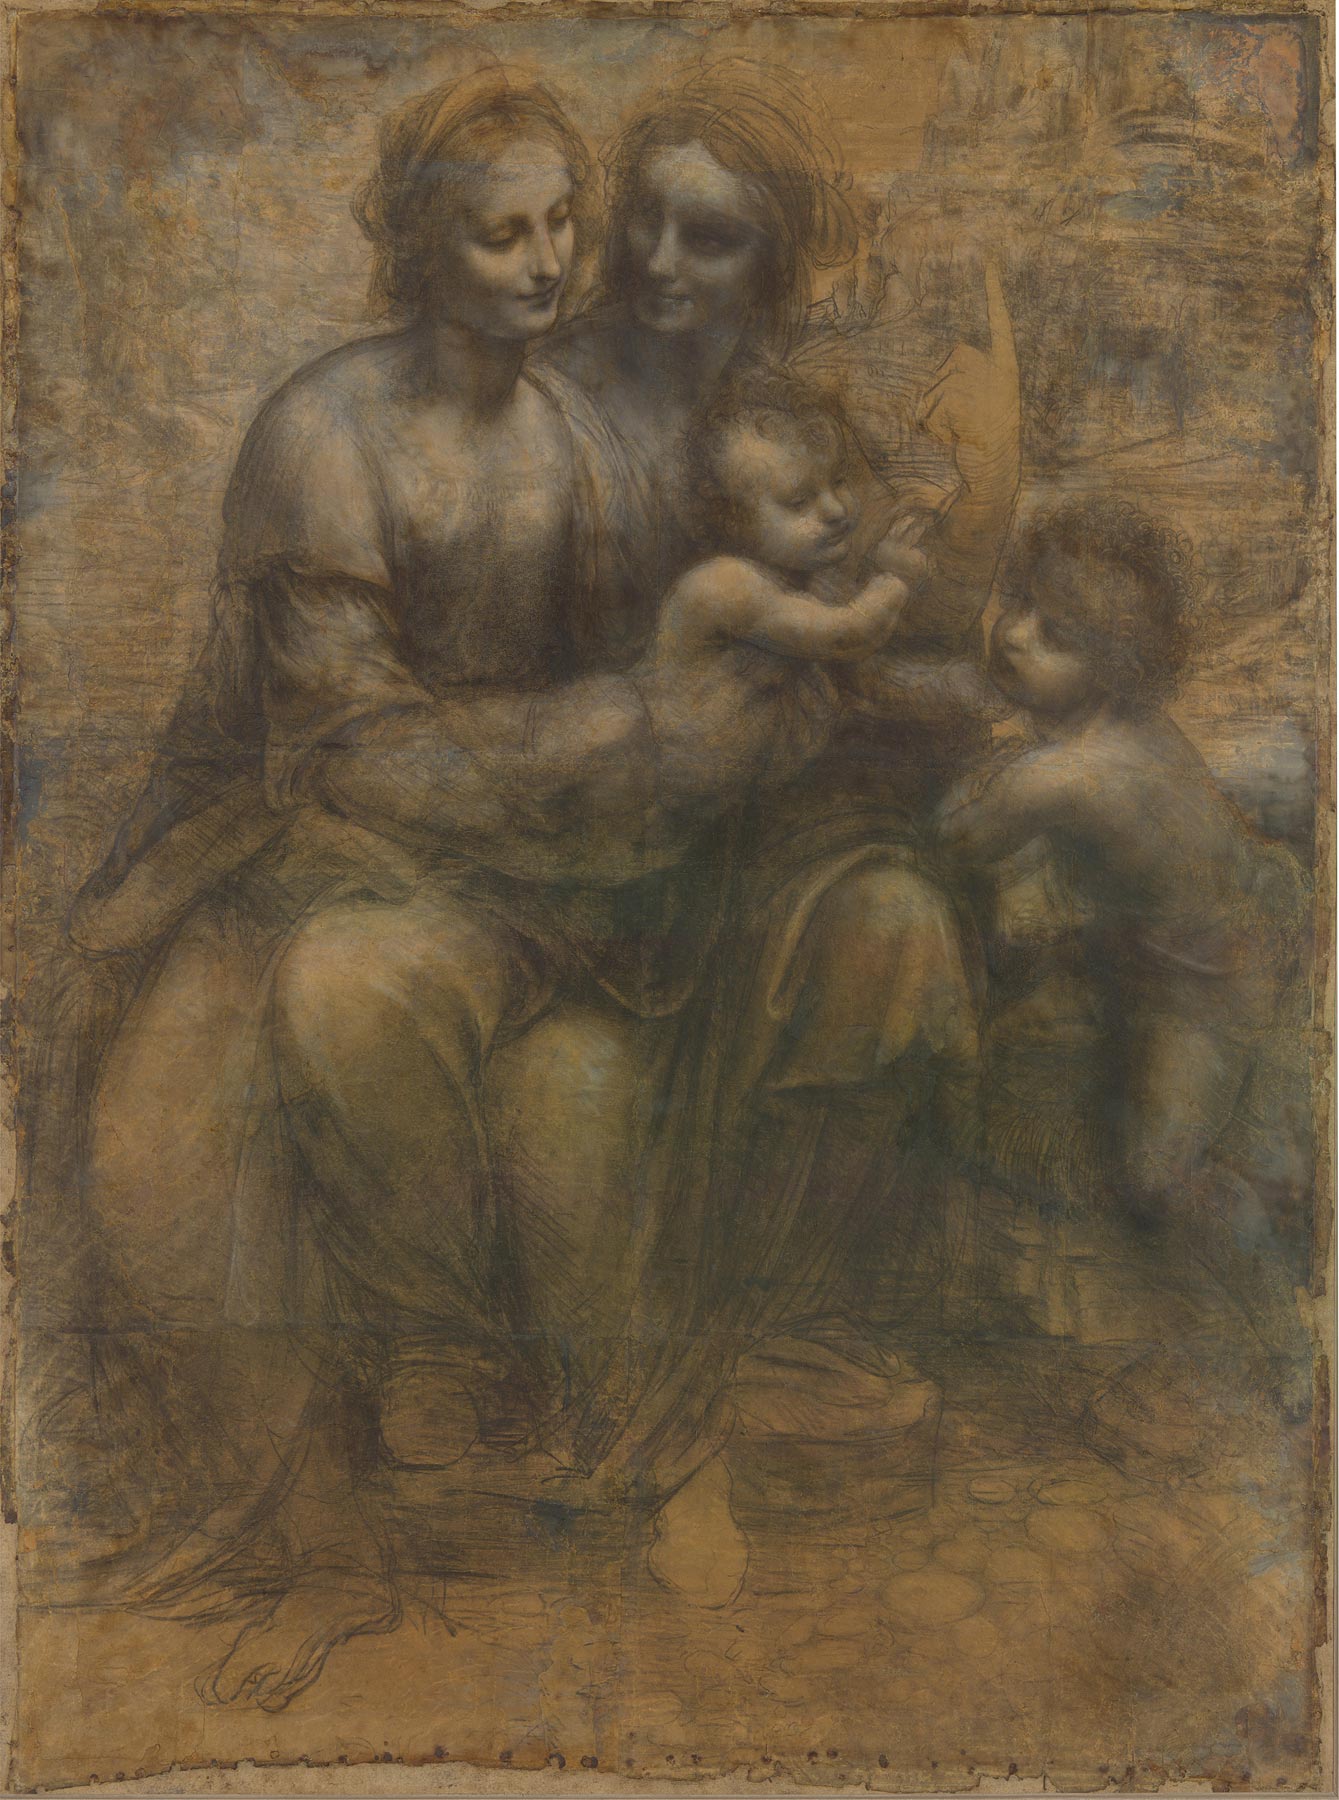 Leonardo da Vinci, Cartone di sant'Anna (1500-1505 circa; gessetto nero e biacca su carta, 1415 x 1046 mm; Londra, National Gallery)
